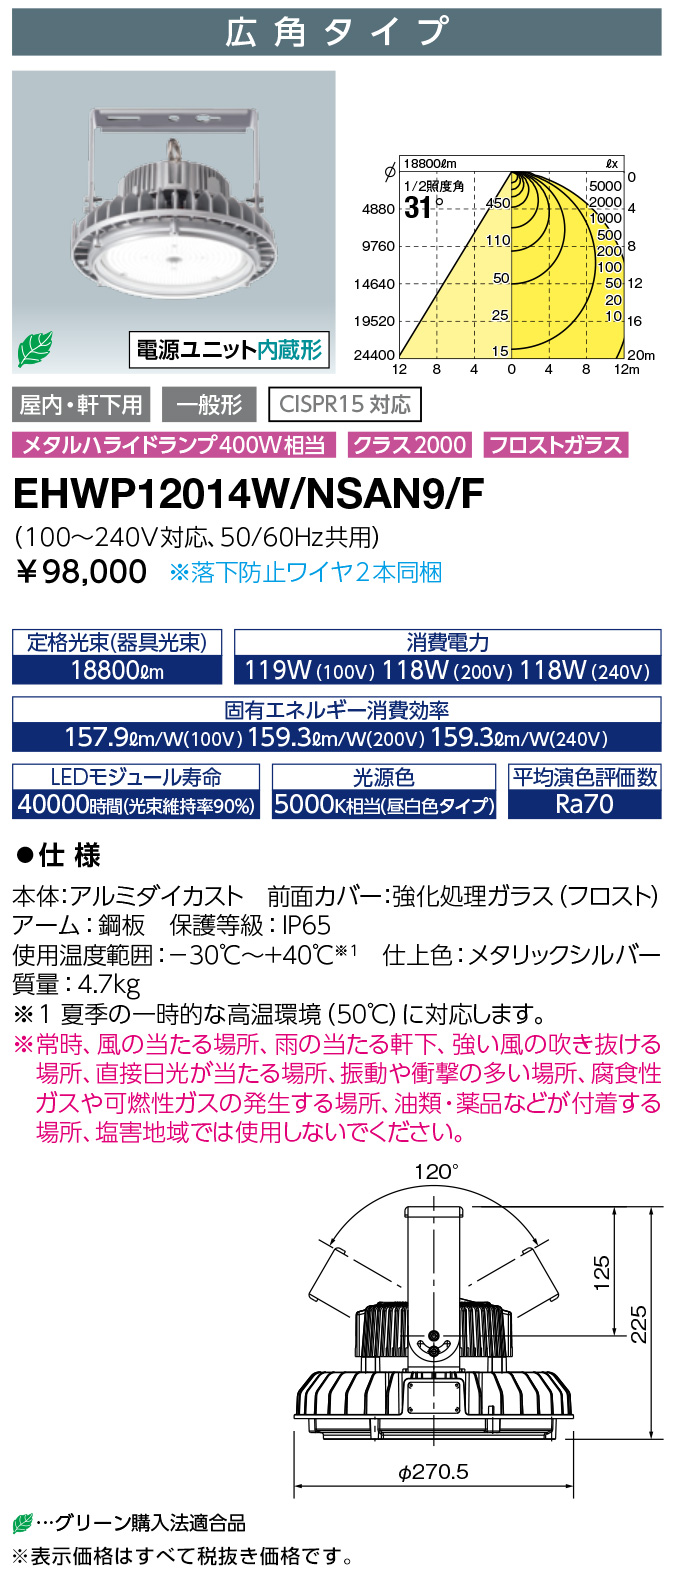 EHWP12014W-NSAN9-F